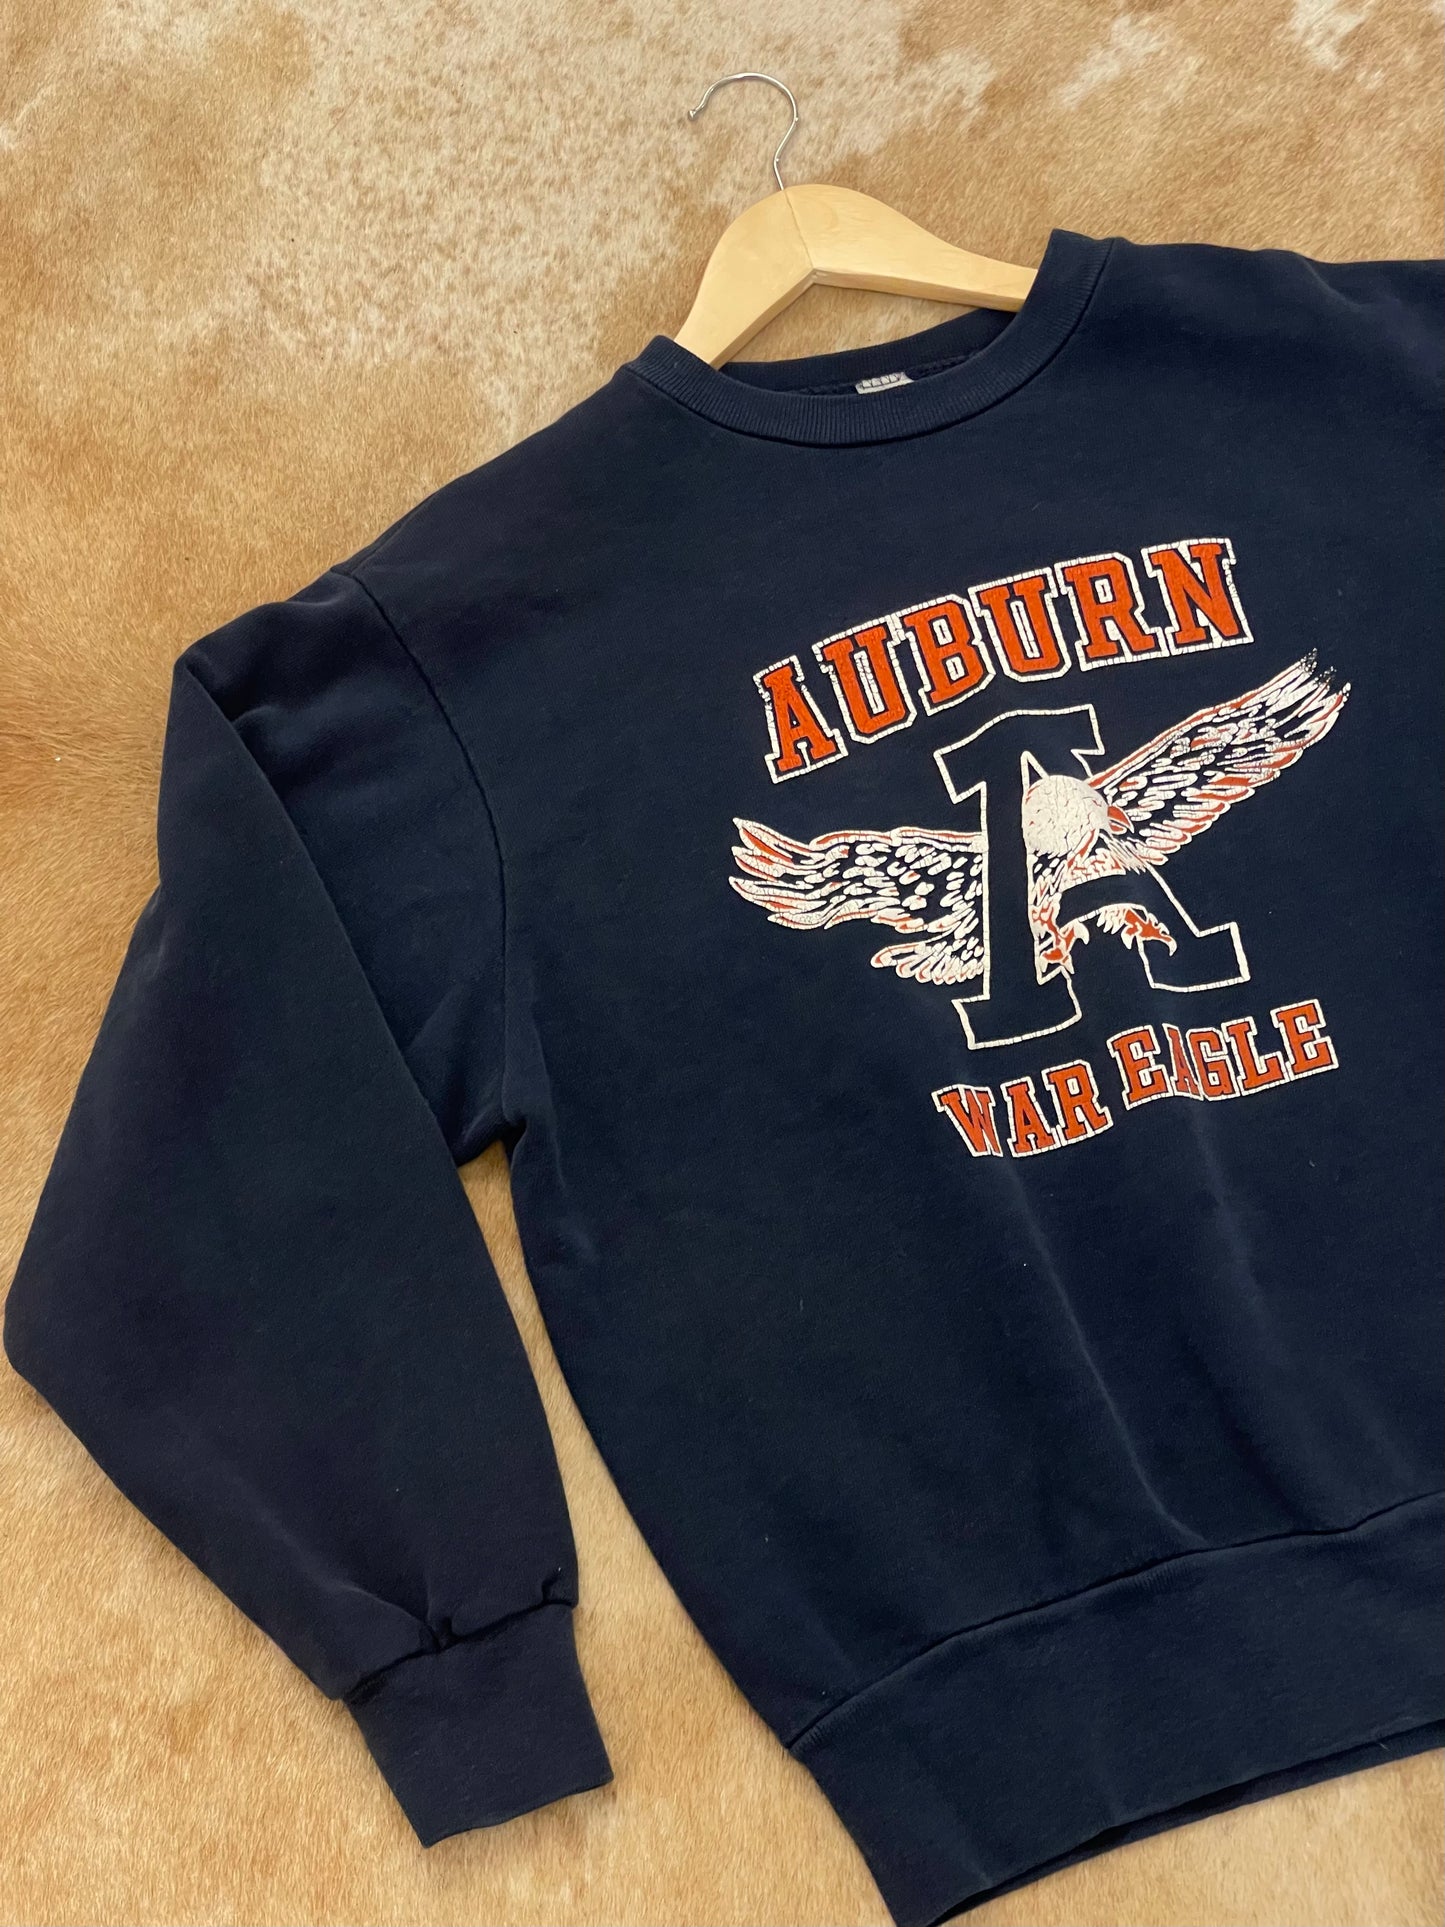 Vintage Auburn University "War Eagle" Sweatshirt - M/L